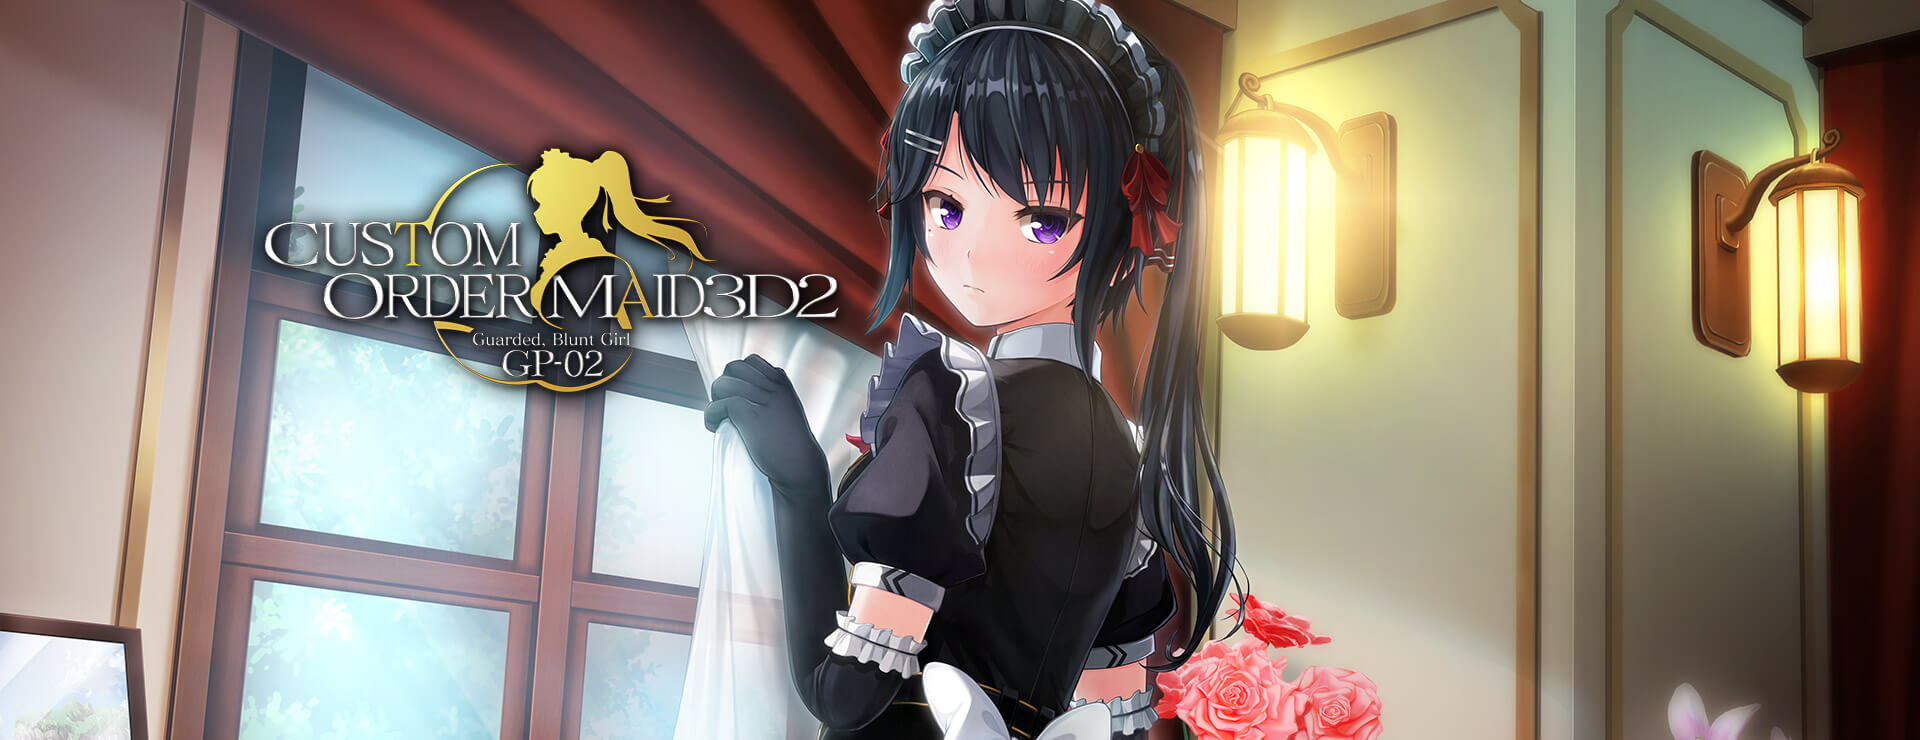 Custom Order Maid 3D2: Guarded, Blunt Girl GP02 DLC - Symulacja Gra